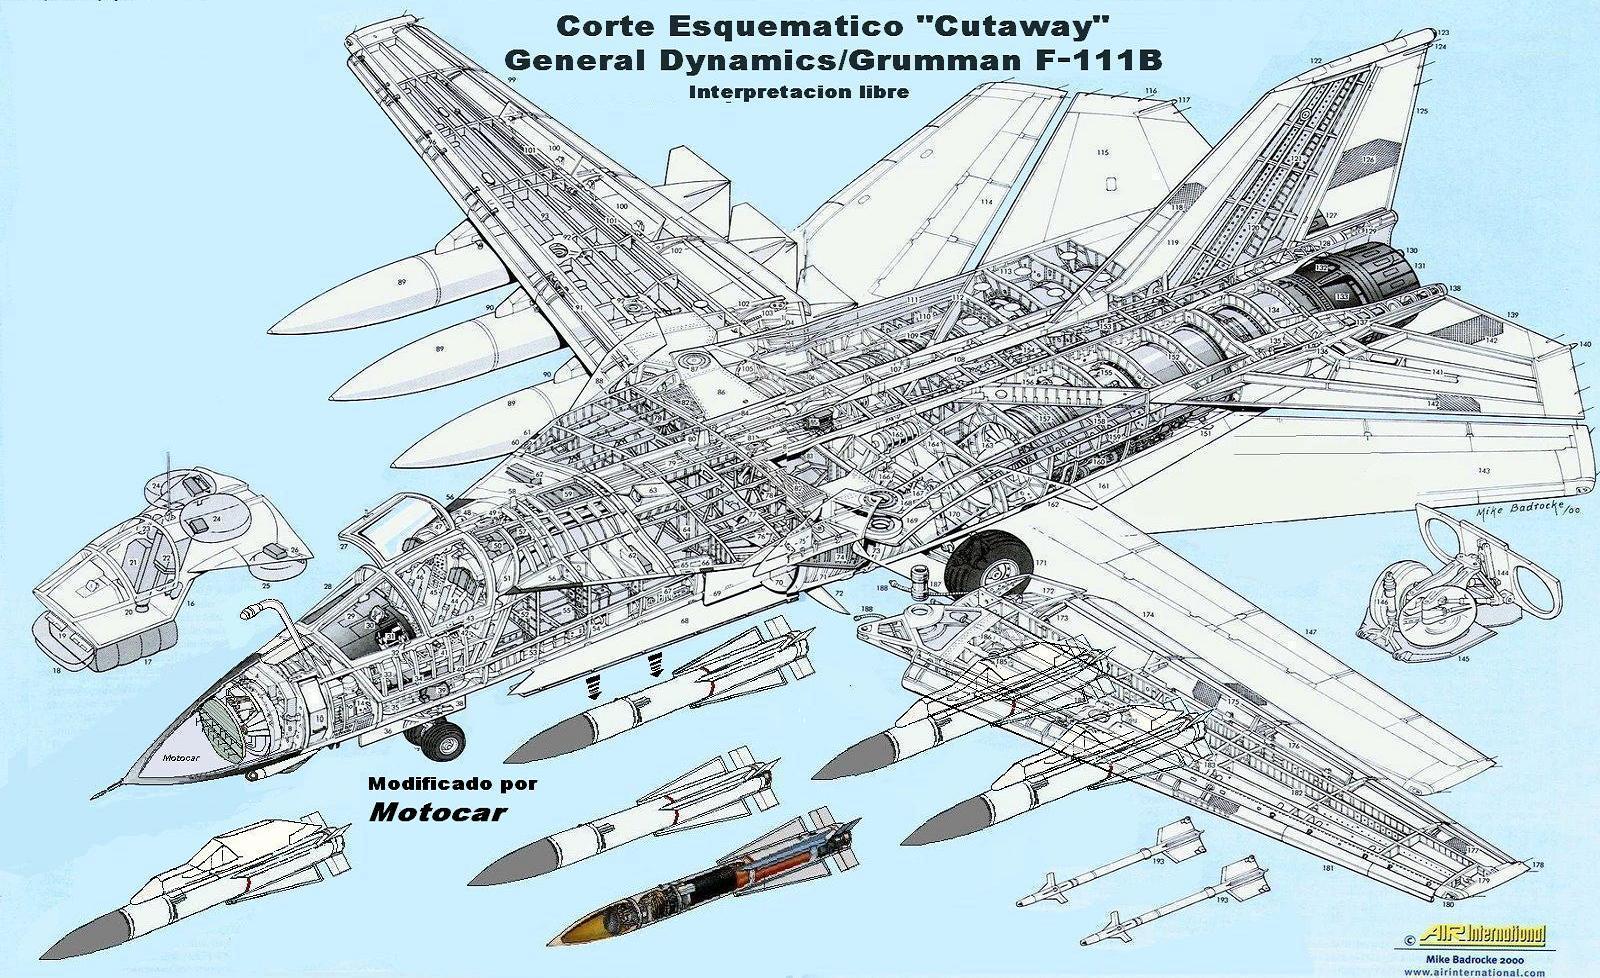 generaldynamic_F-111b